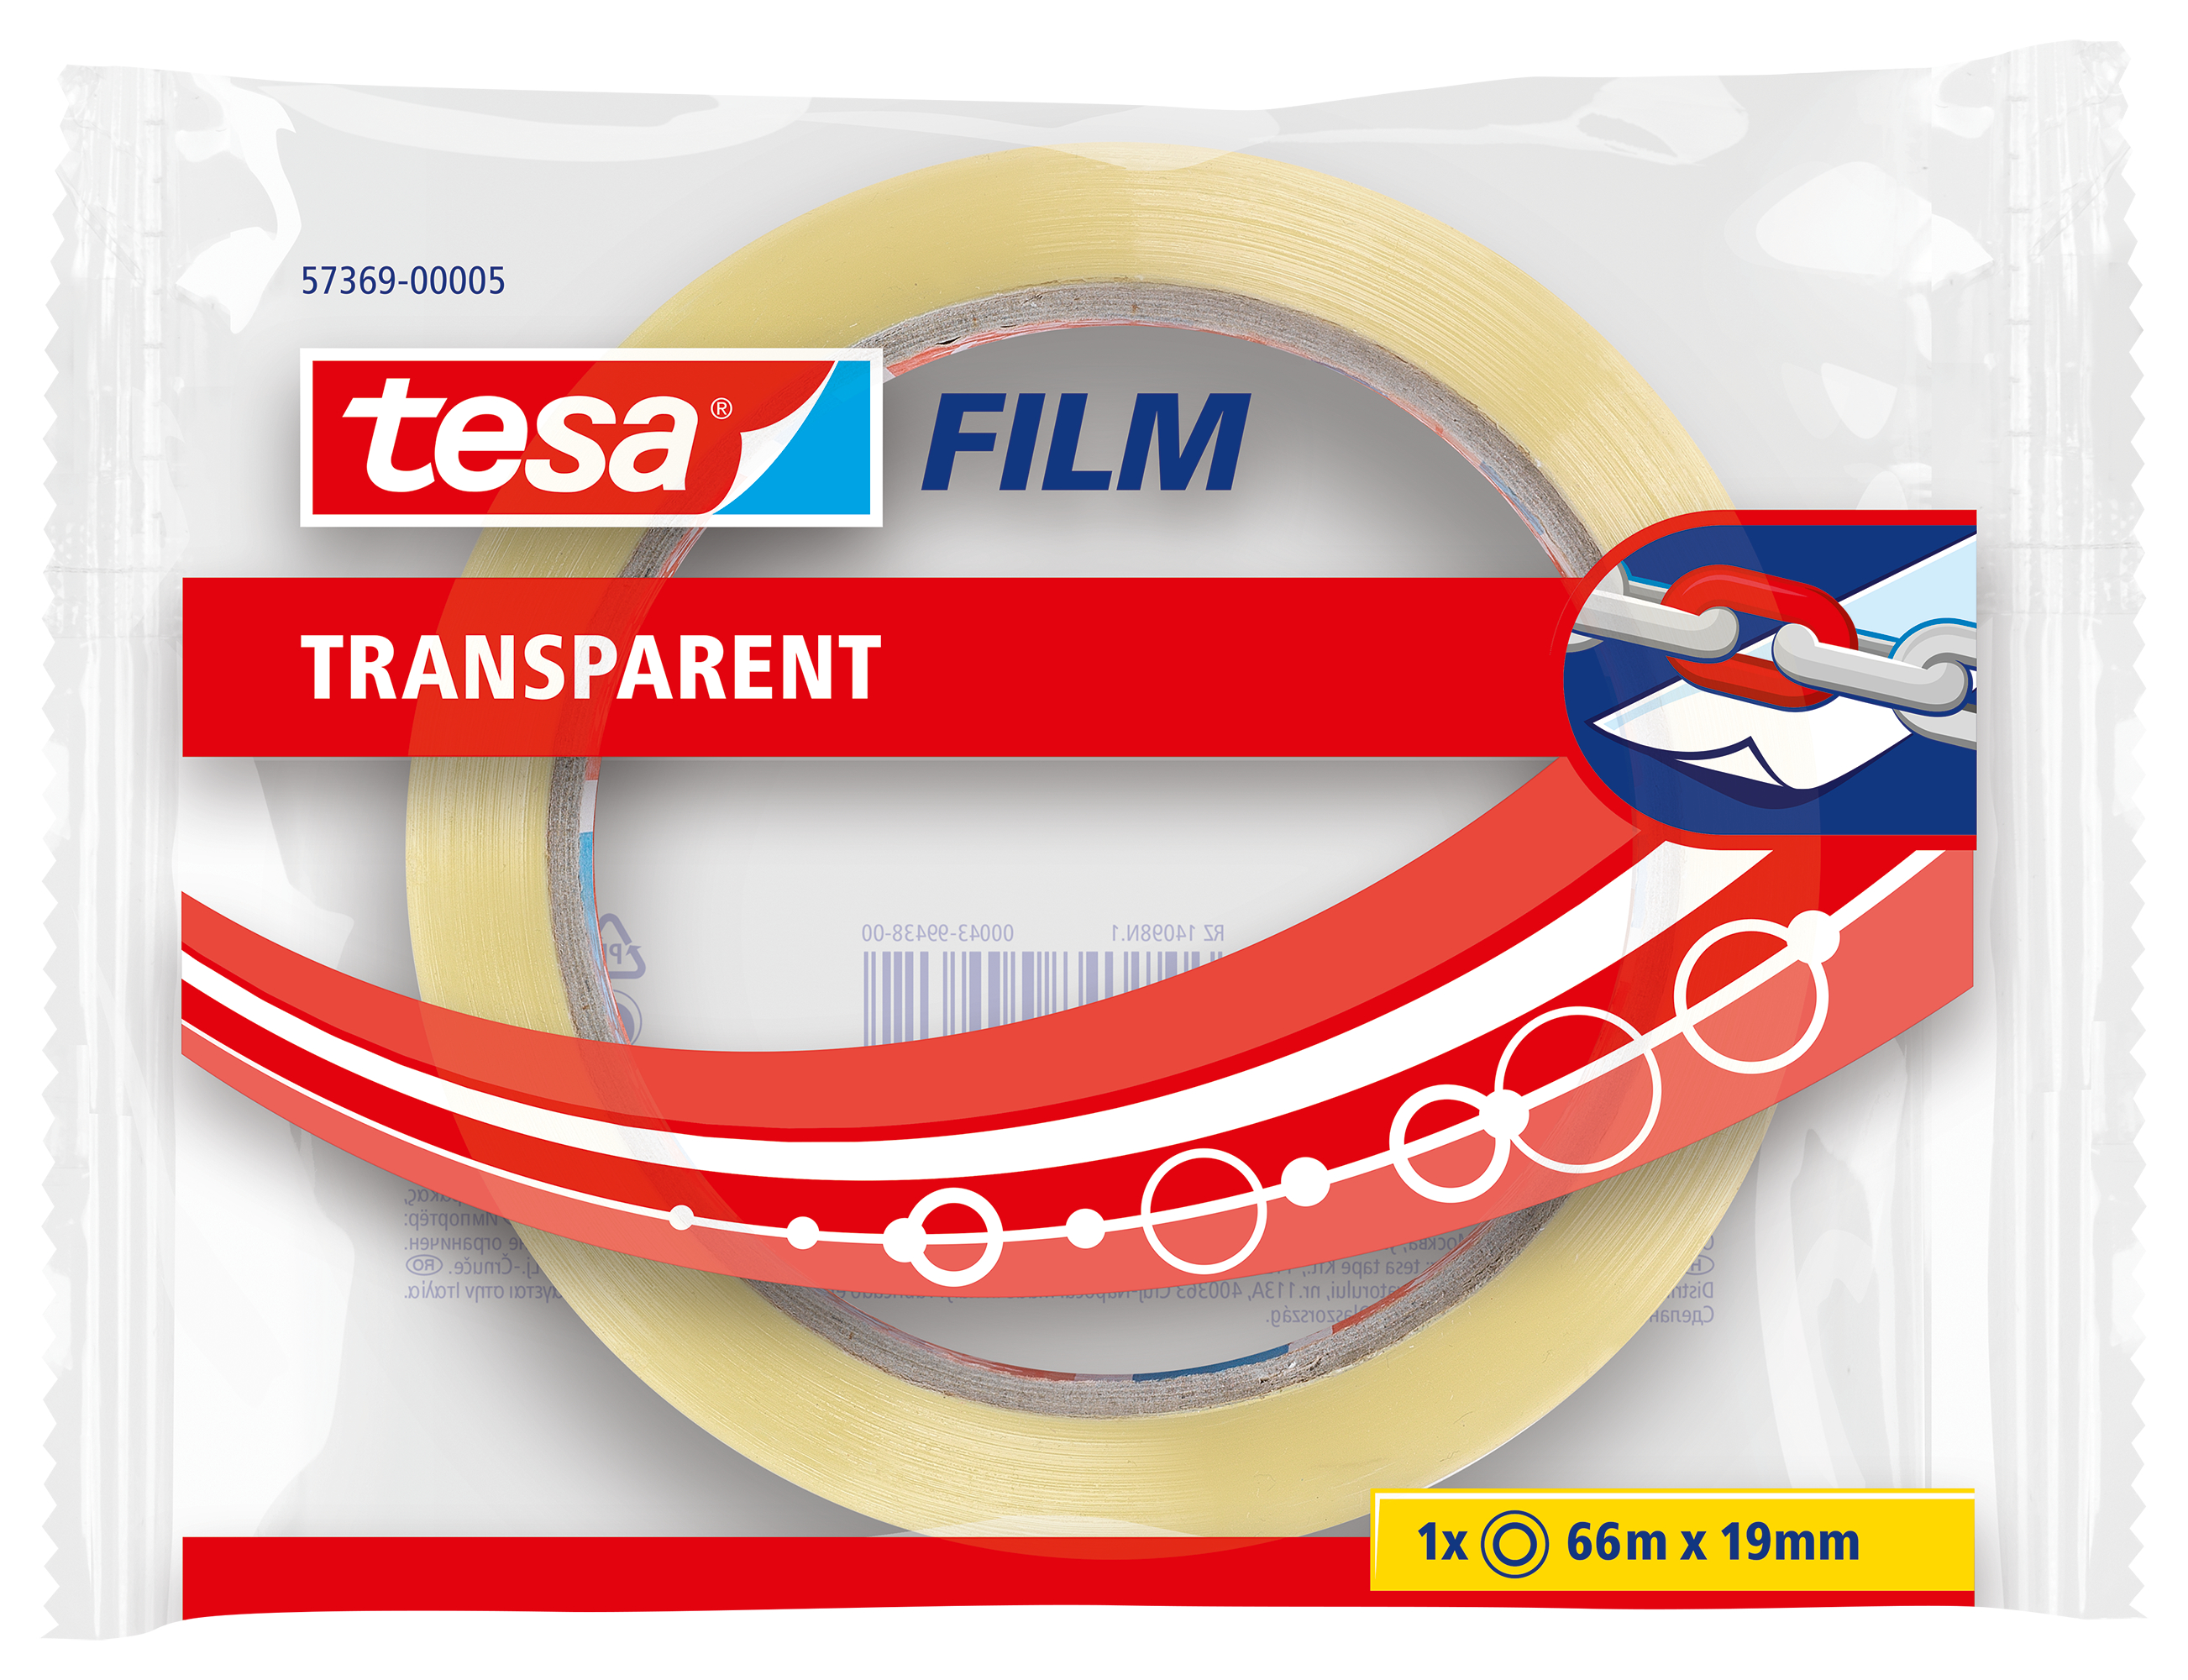 TESA tesafilm Flowpack 66mx19mm 573690000 transparent 1 rouleau transparent 1 rouleau